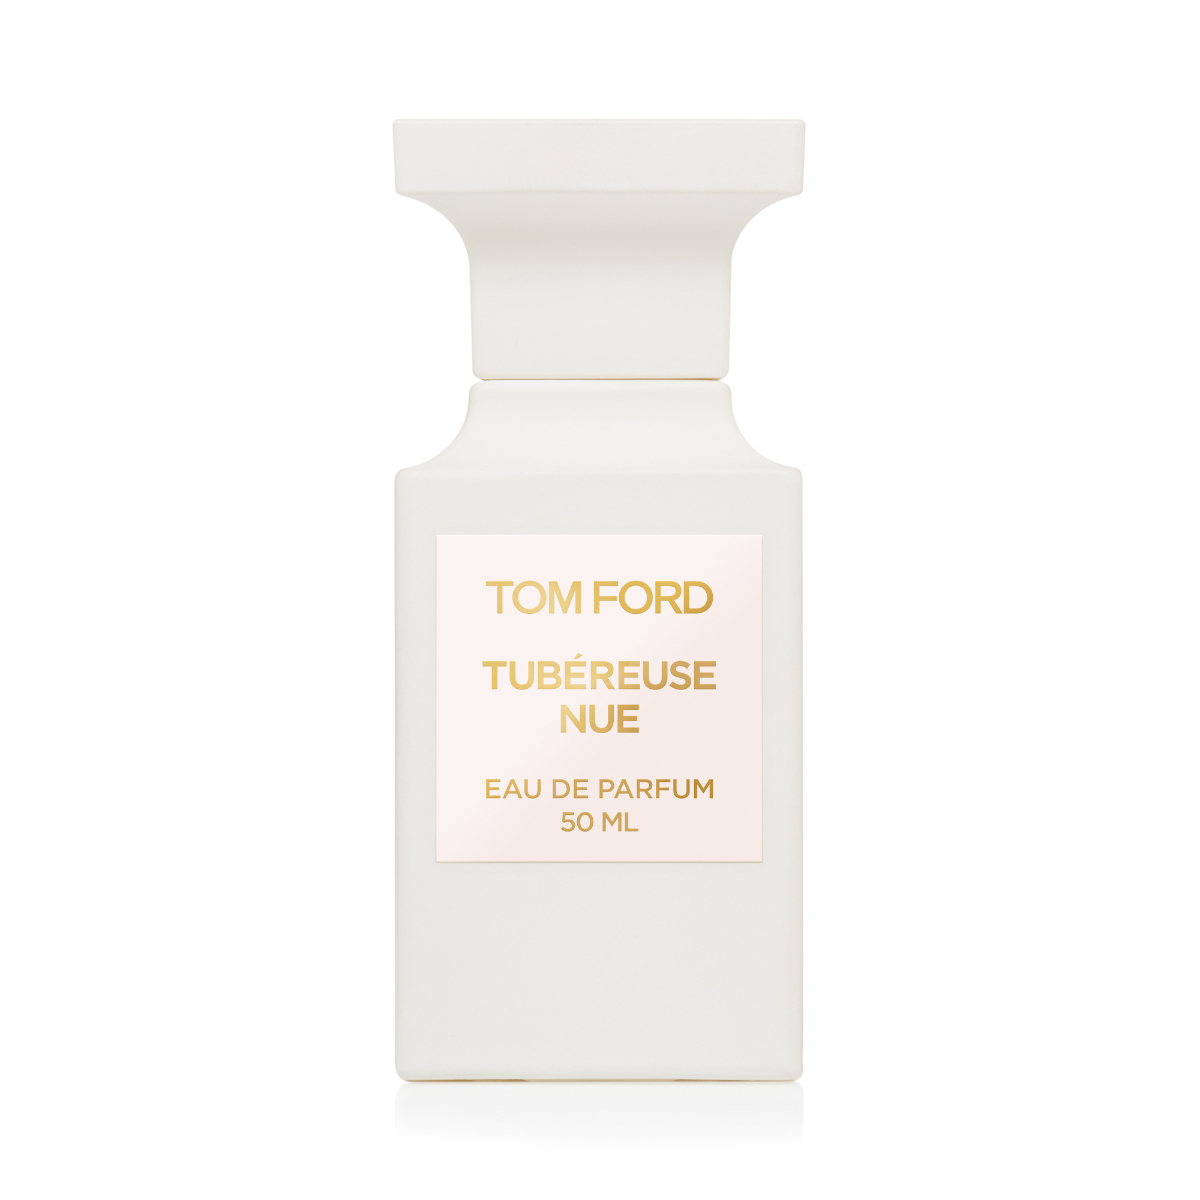 Tom Ford Presents Latest Private Blend Fragrance - Tubéreuse Nue